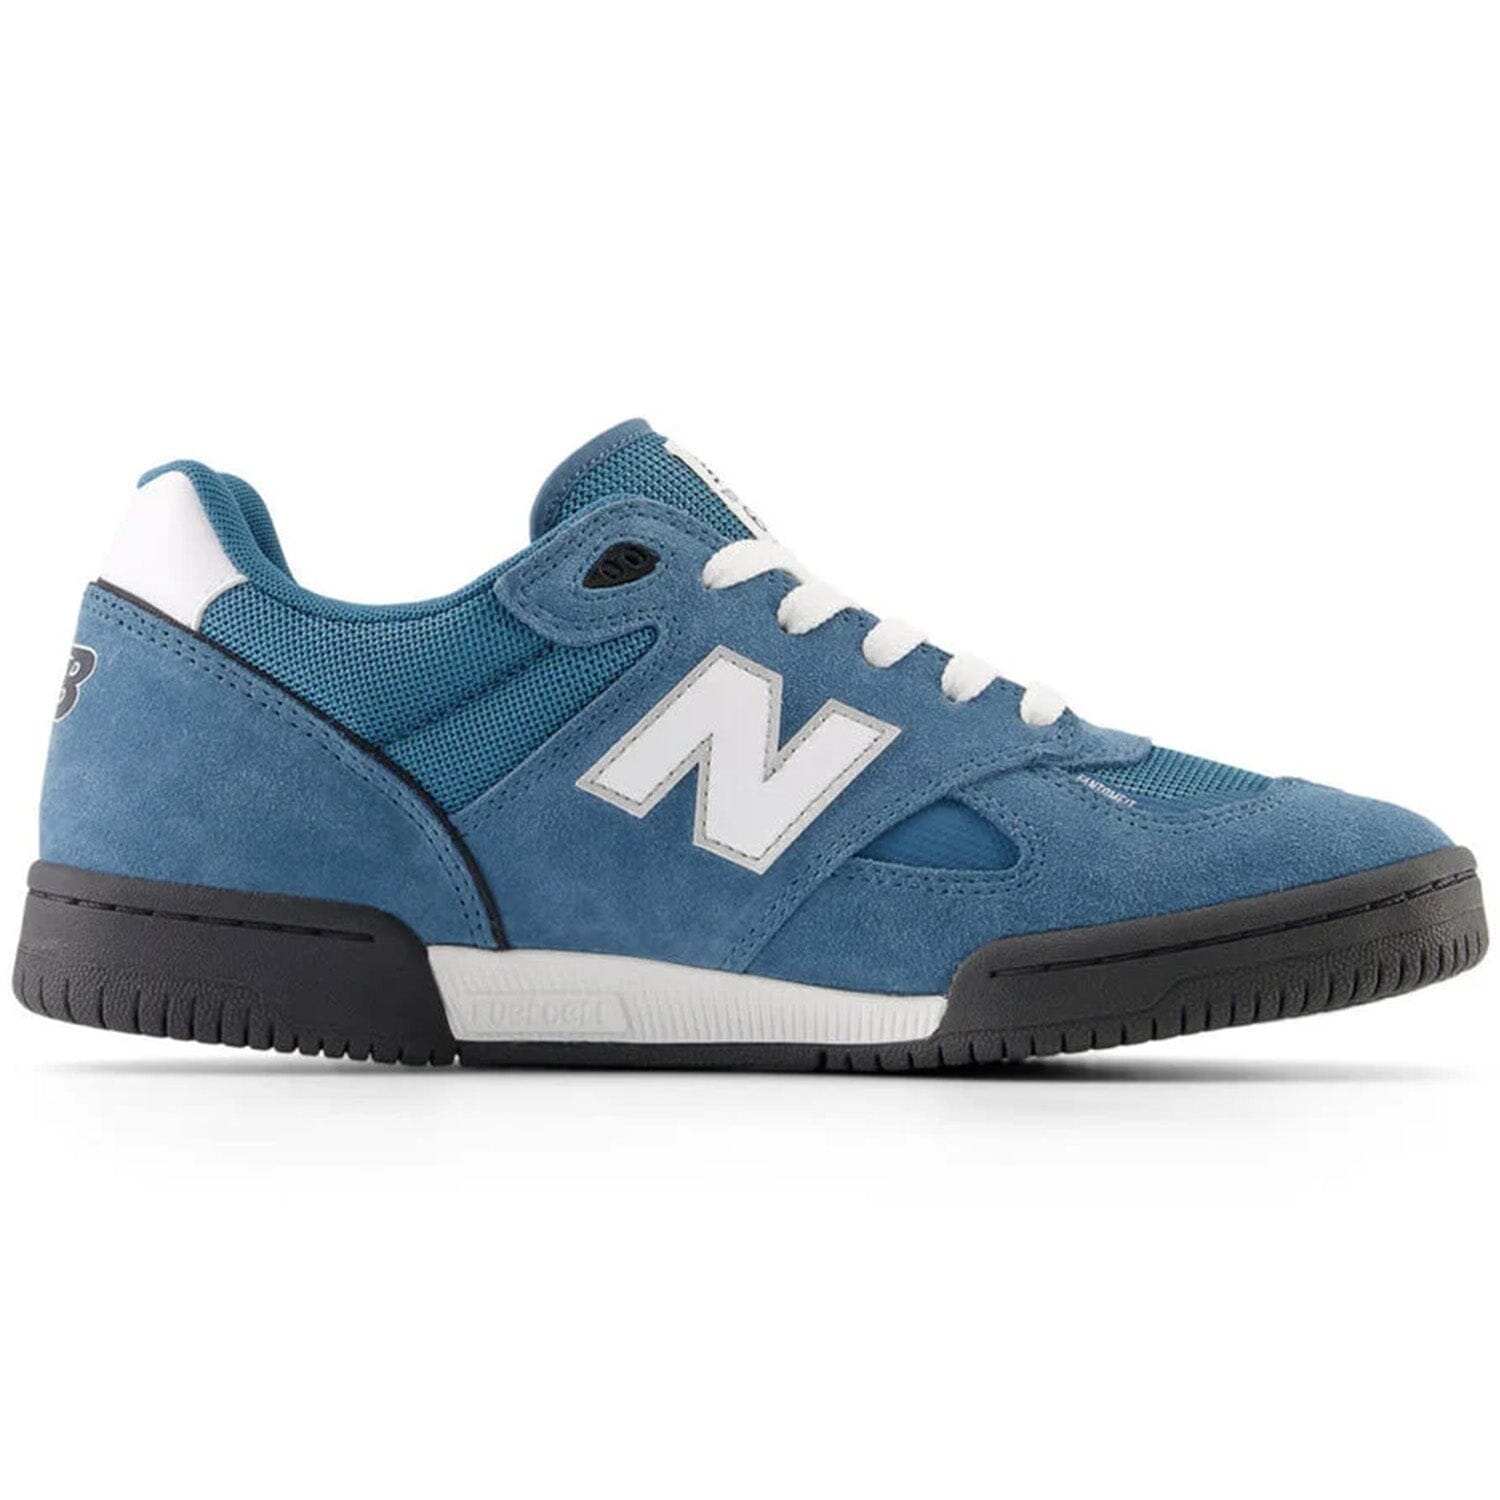 New Balance Numeric Tom Knox NM600 Elemental Blue/Black footwear New Balance Numeric 